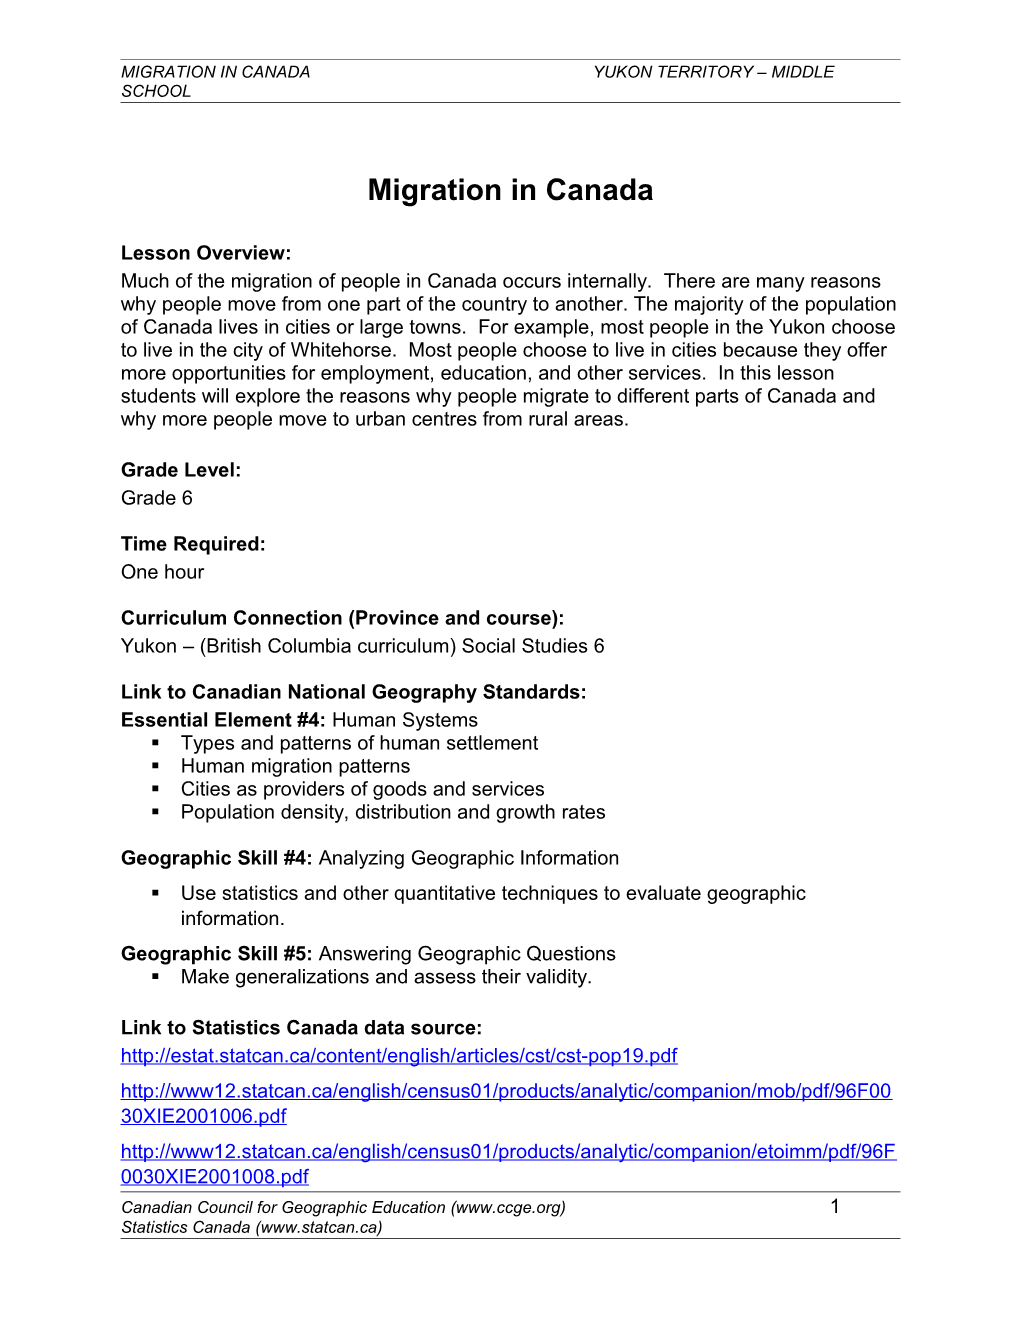 Migration in Canada Yukon Territory Middle School